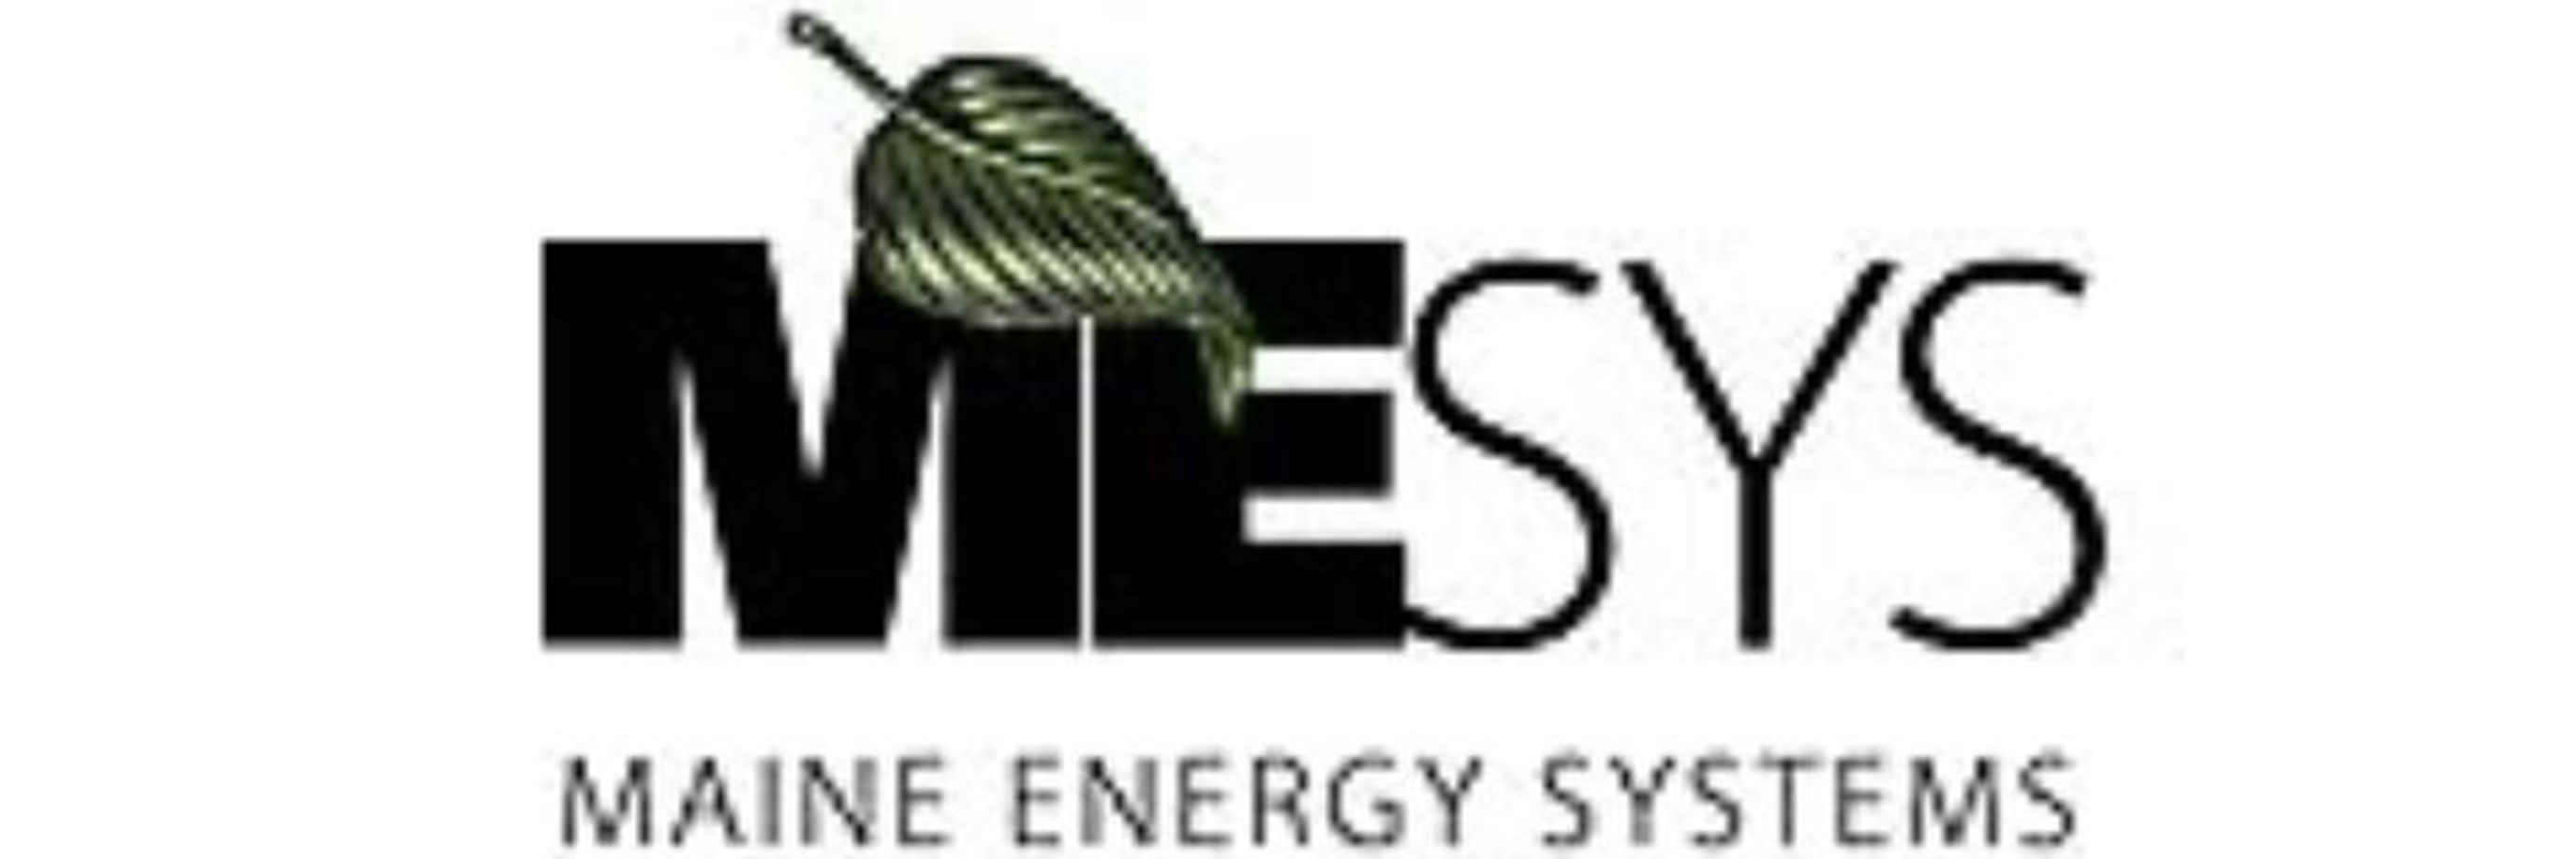 MAINE ENERGY SYSTEMS